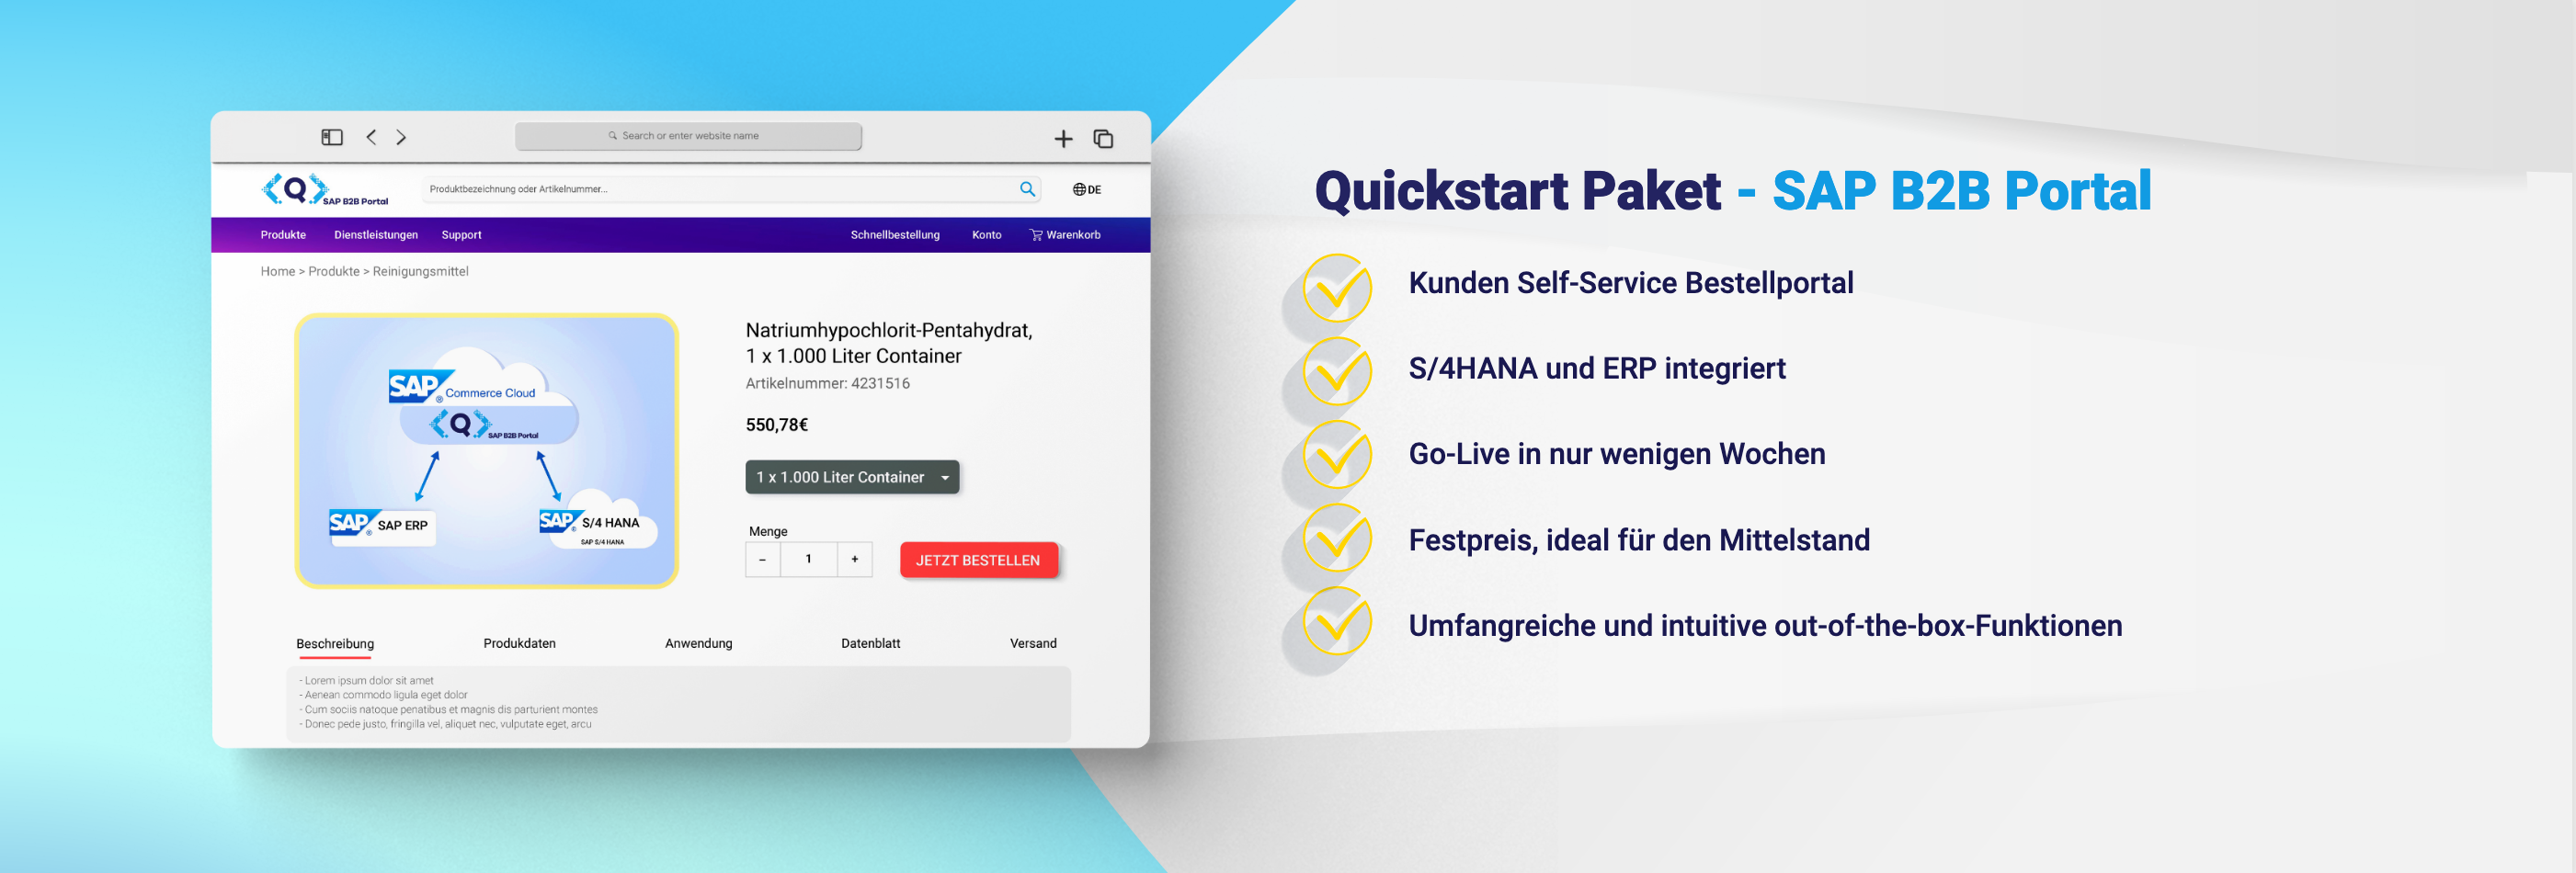 Quickstart Paket - SAP B2B Portal